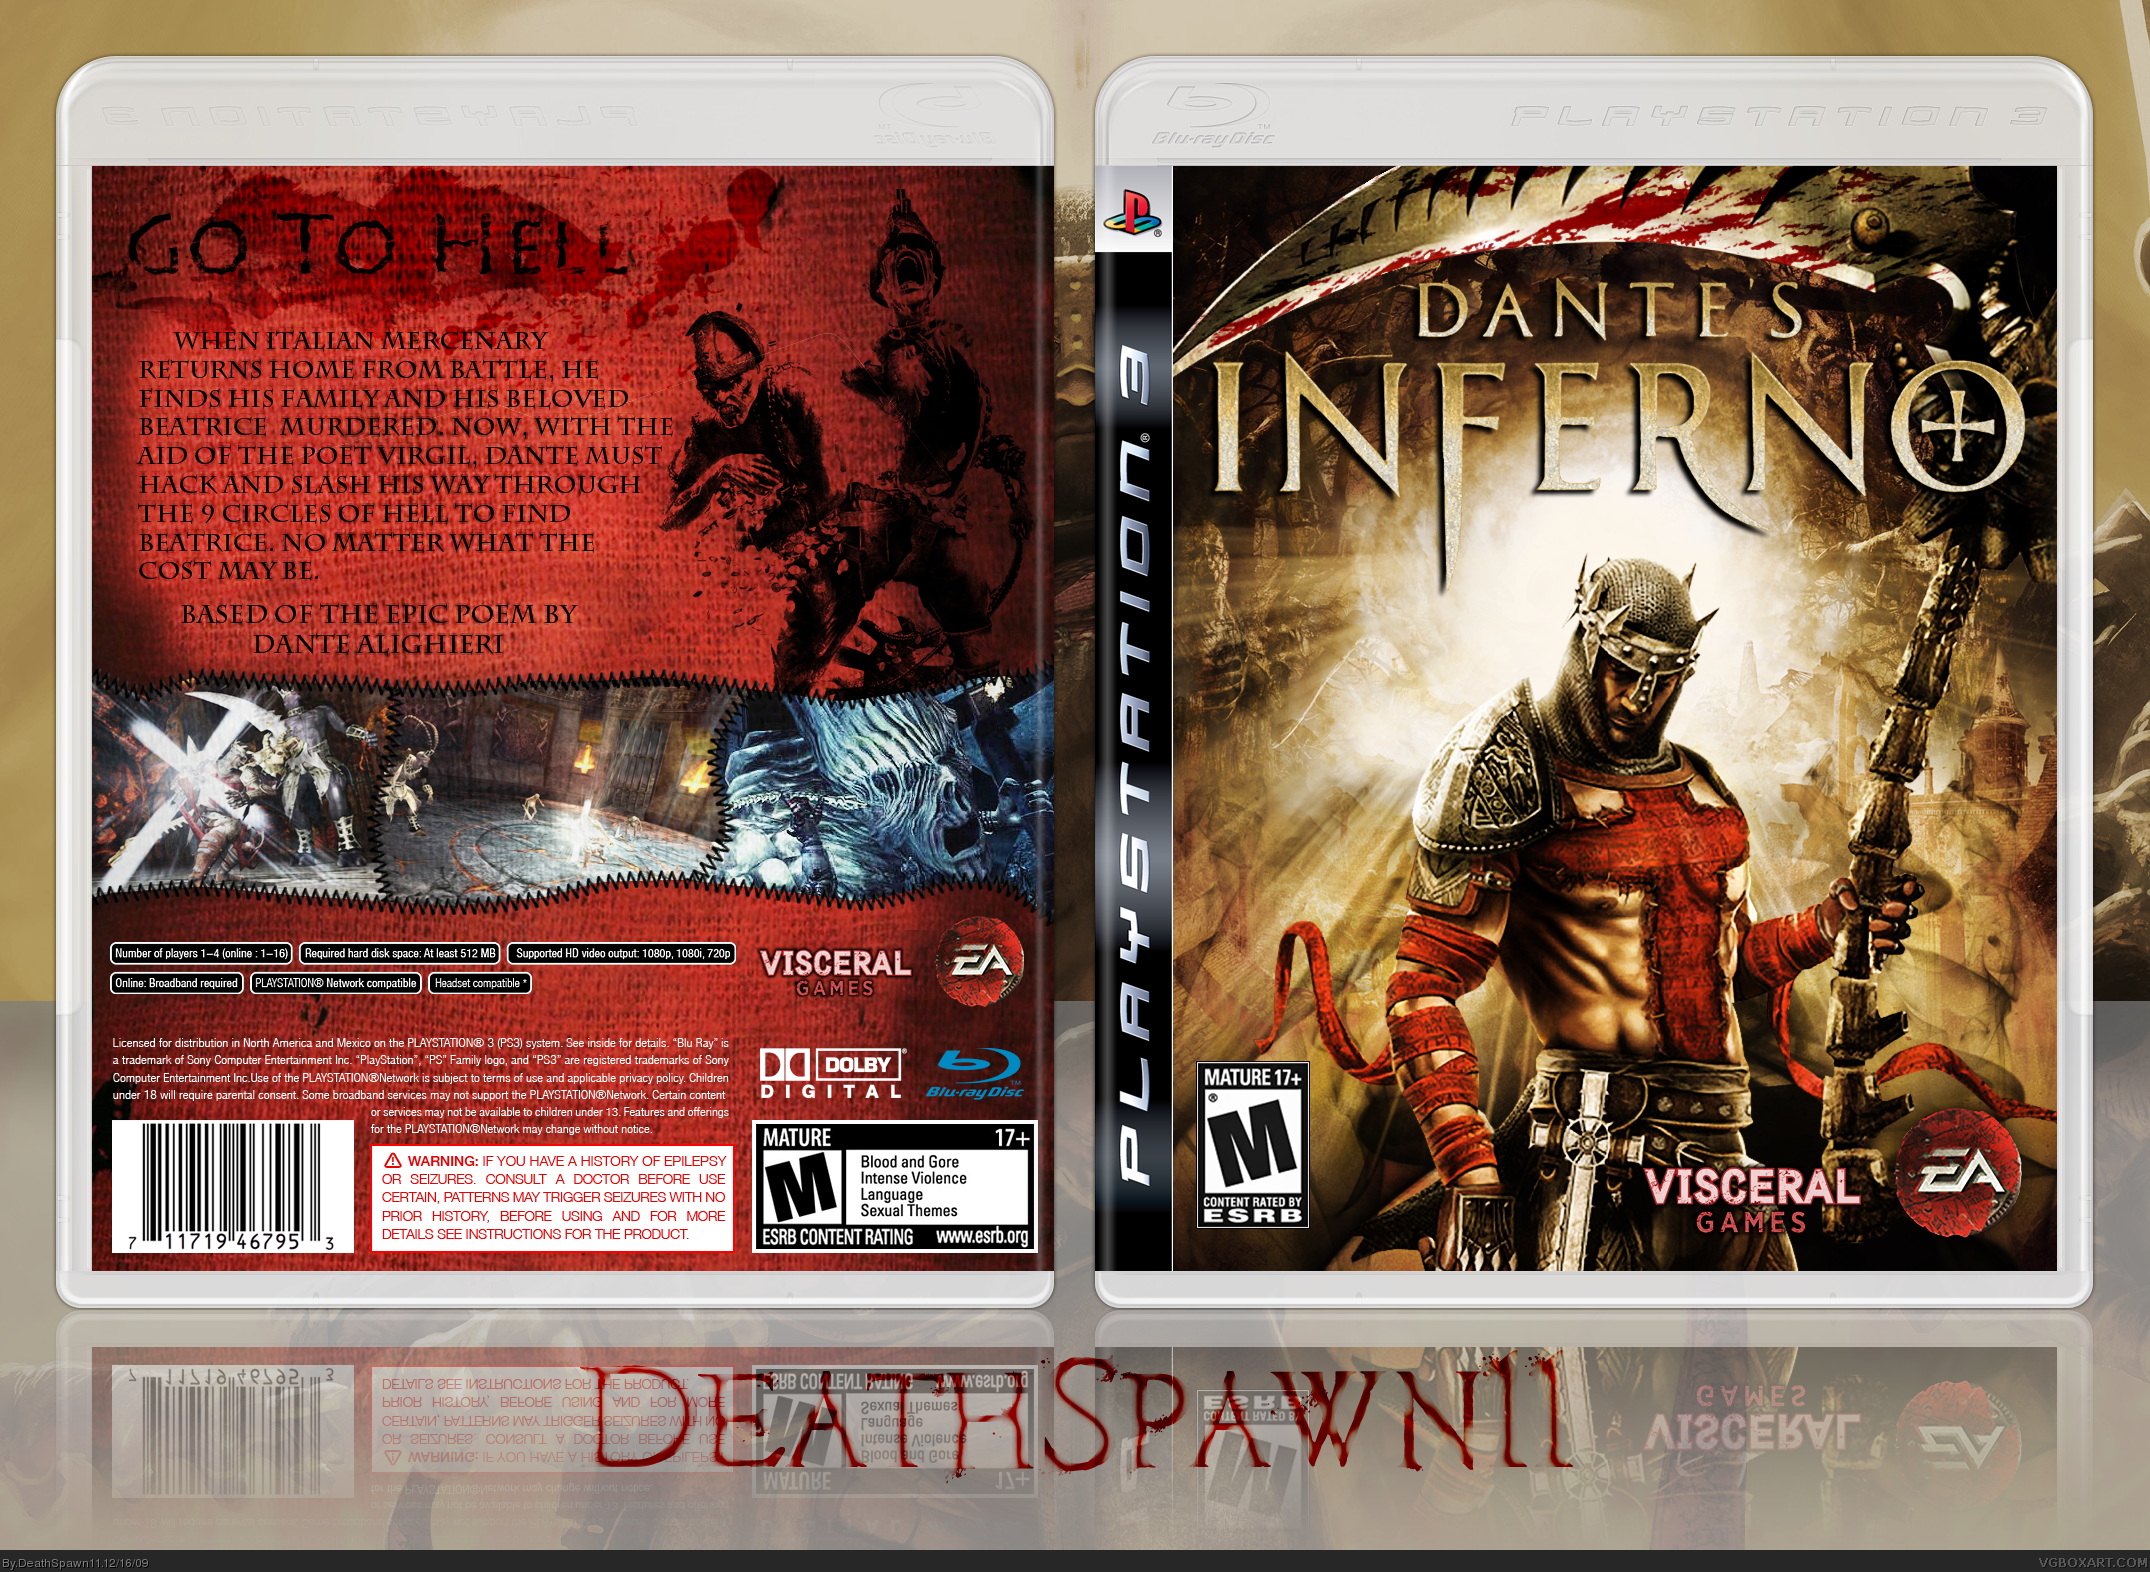 Dantes Inferno box cover